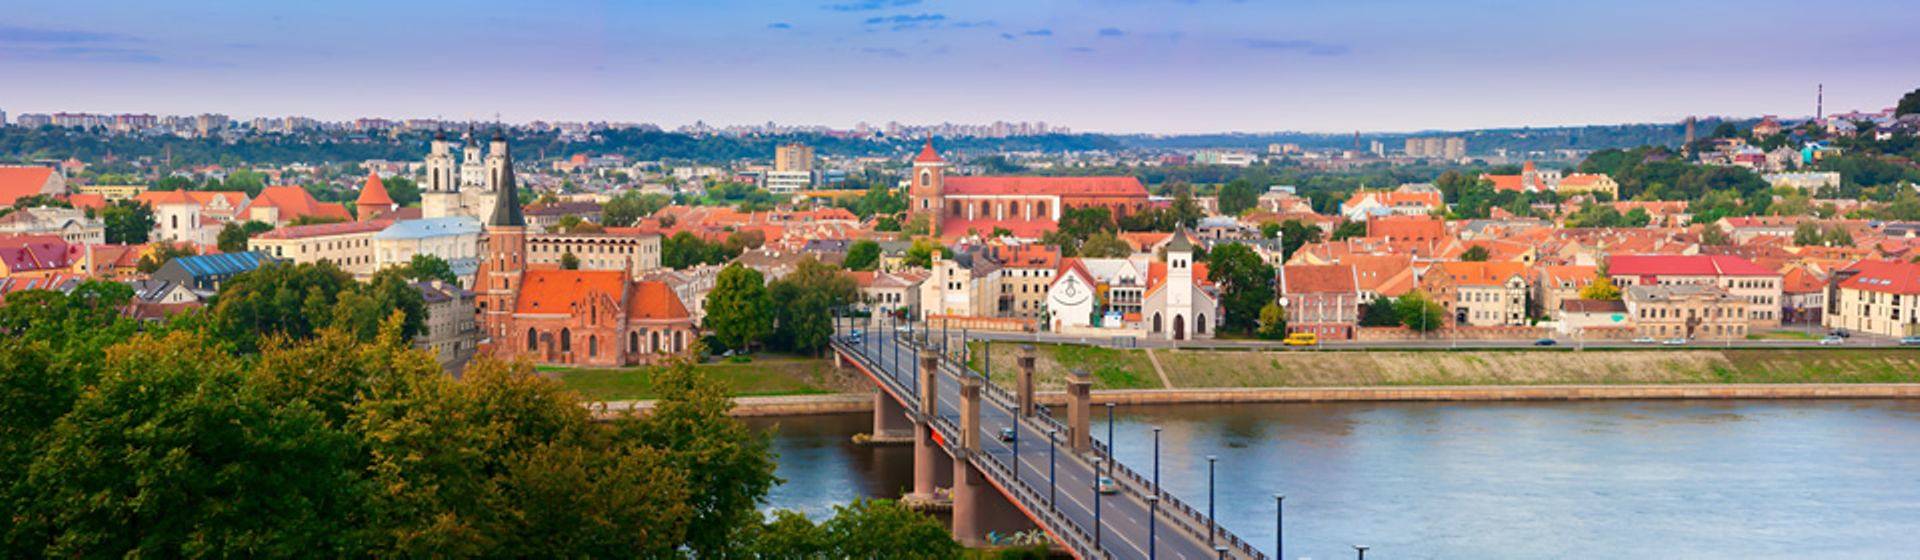 Holidays to Lithuania Image